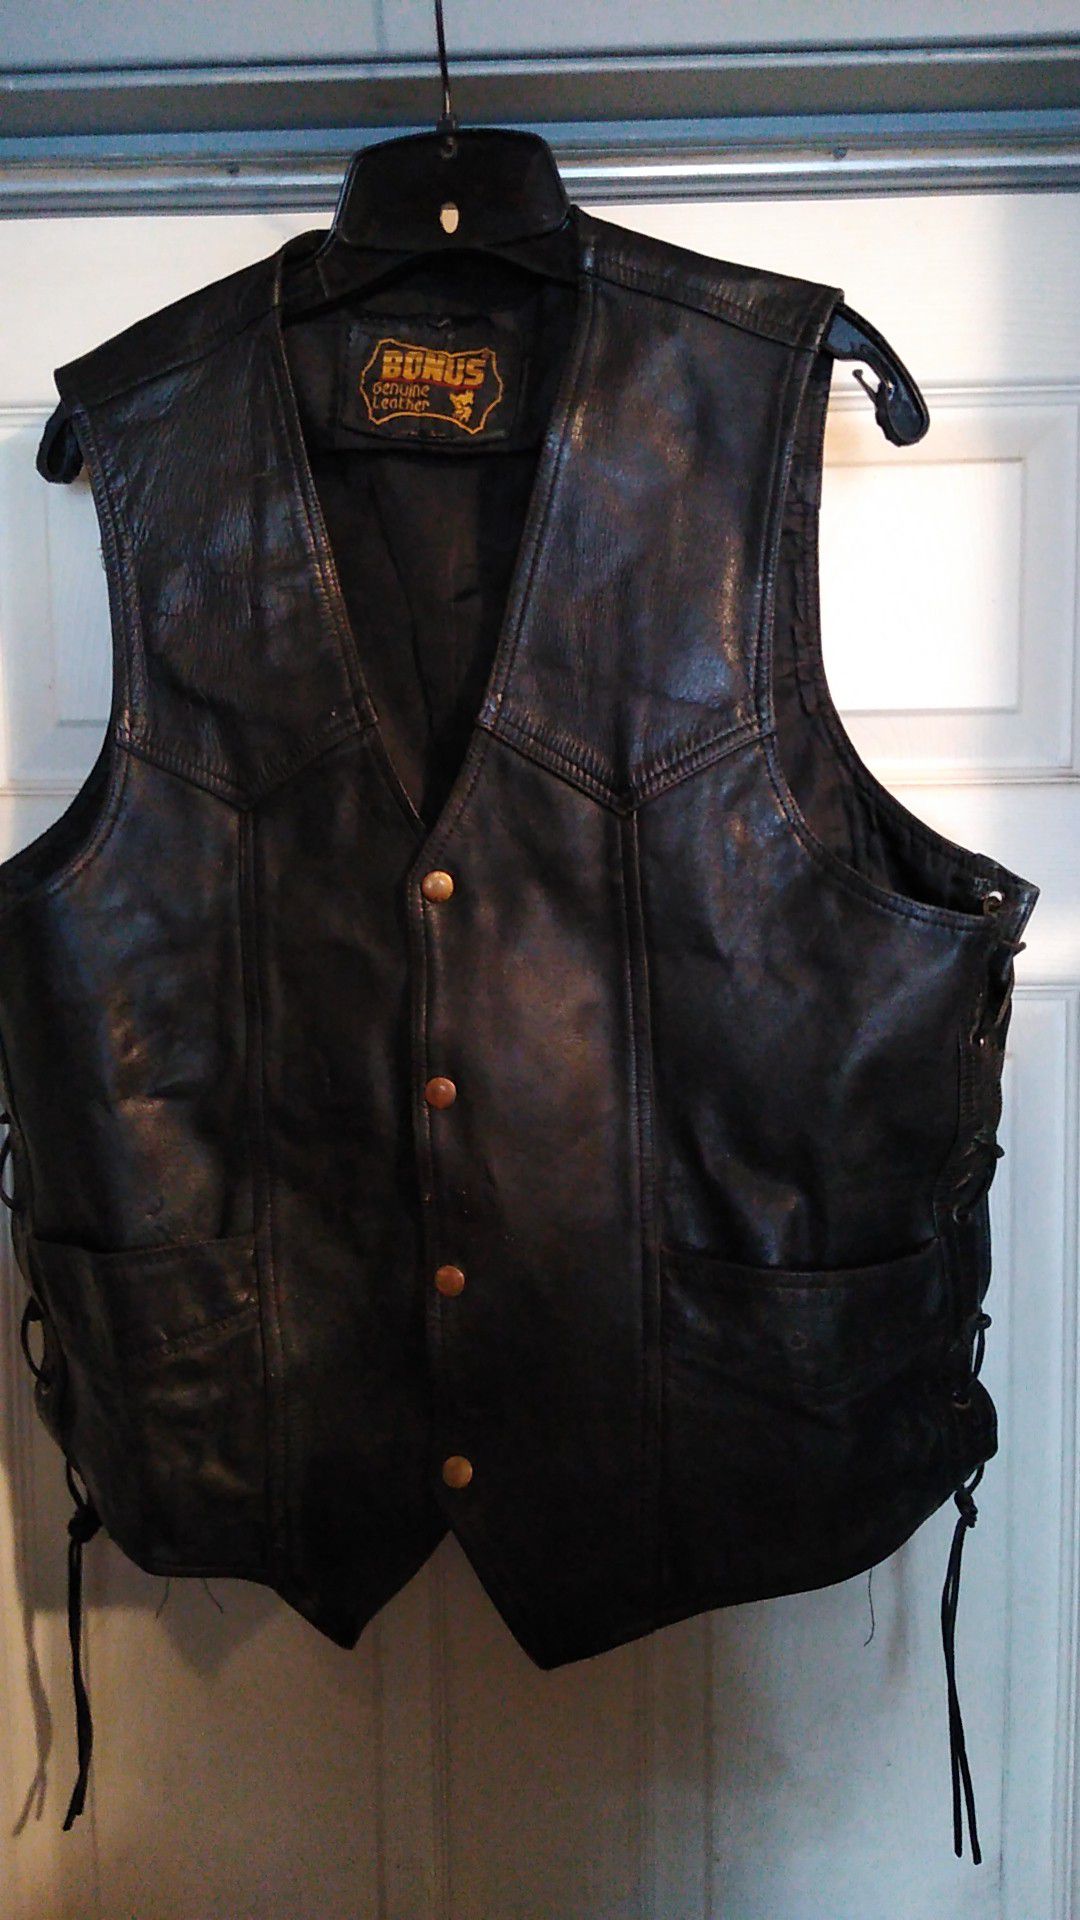 Bonus Genuine Cowhide Leather 2 Pocket Motor Cycle Vest size 46